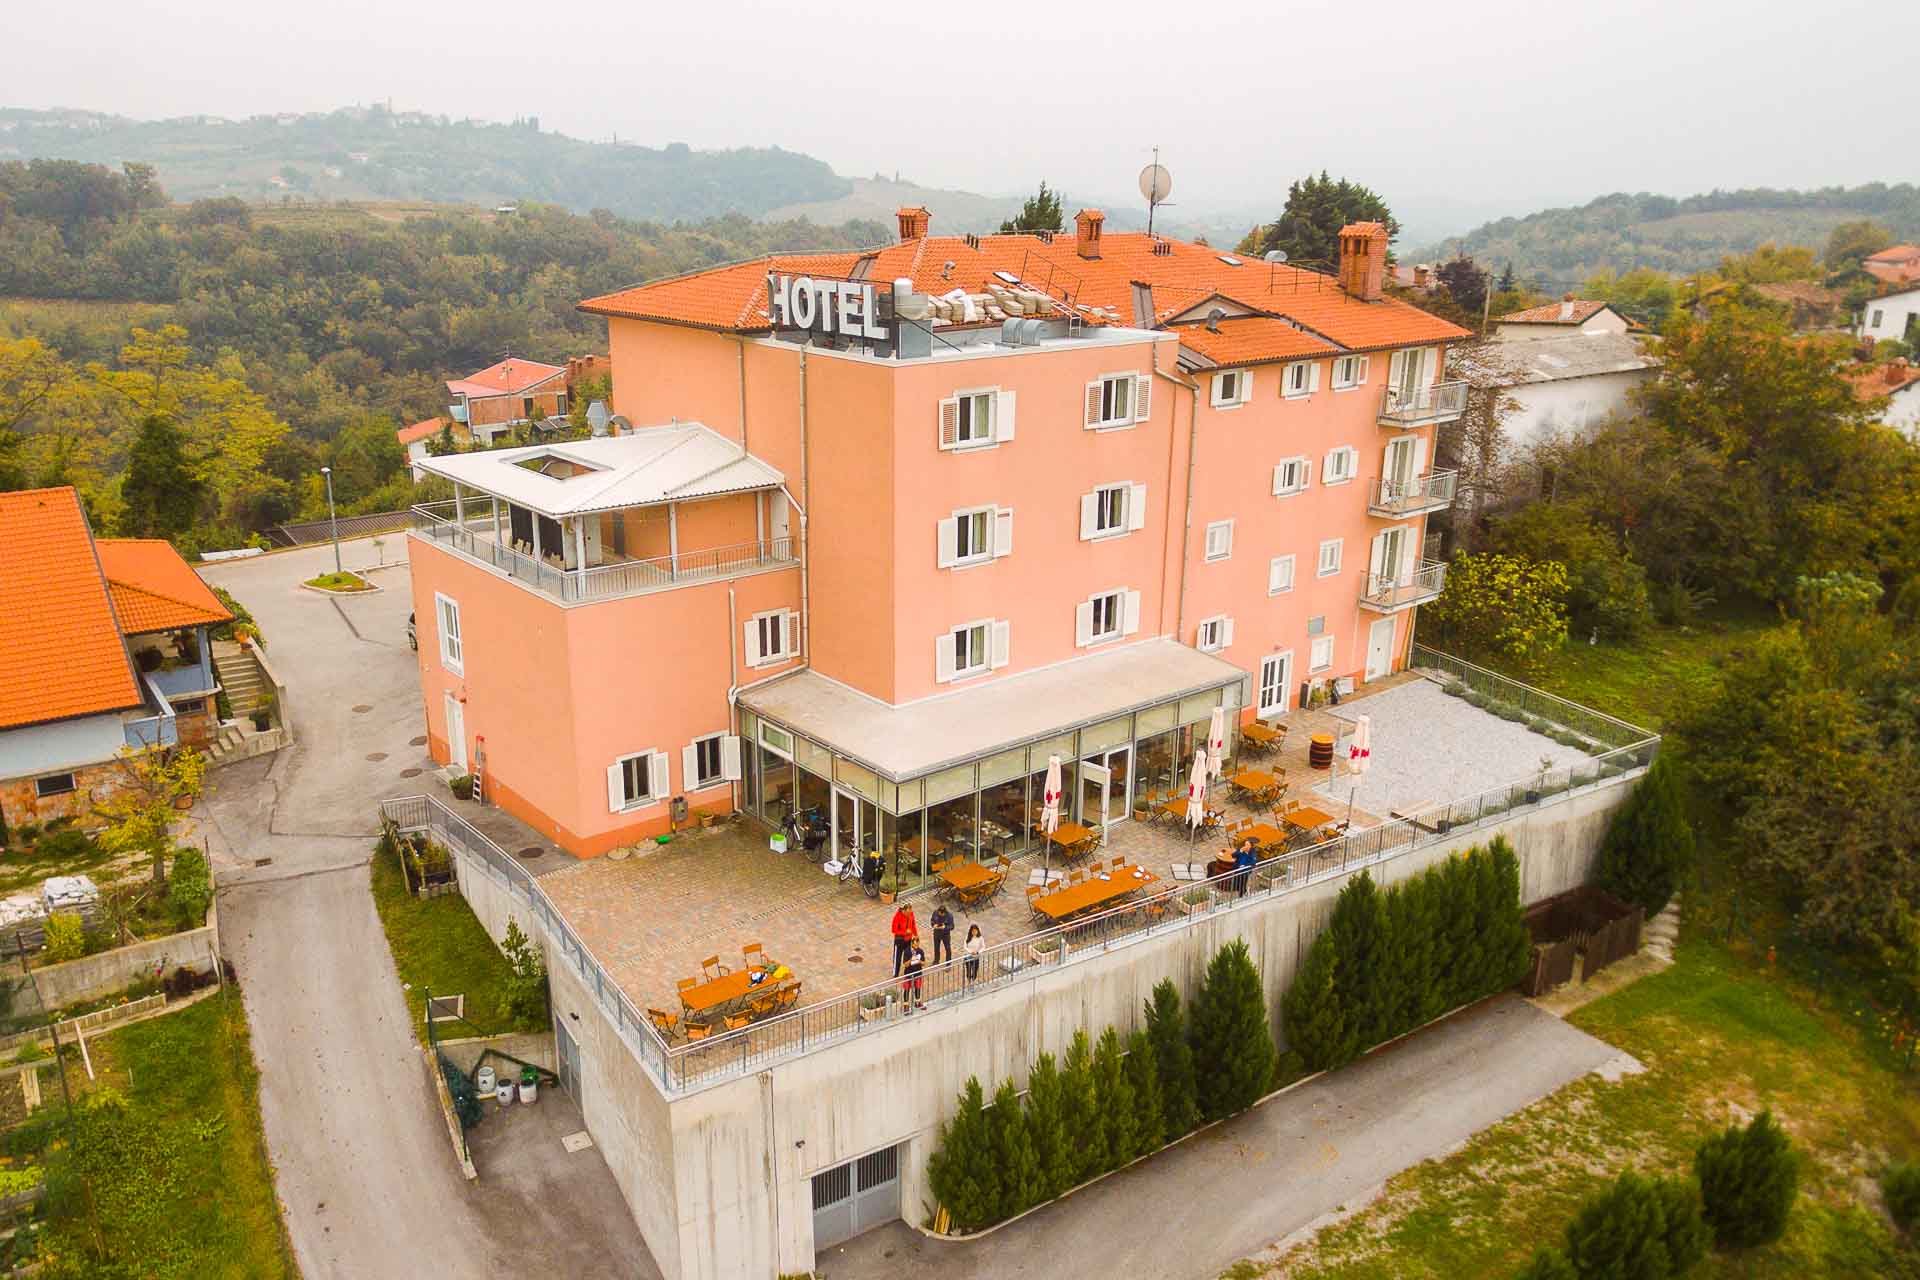 Vista aerea do hotel Vila Kozana em Brda